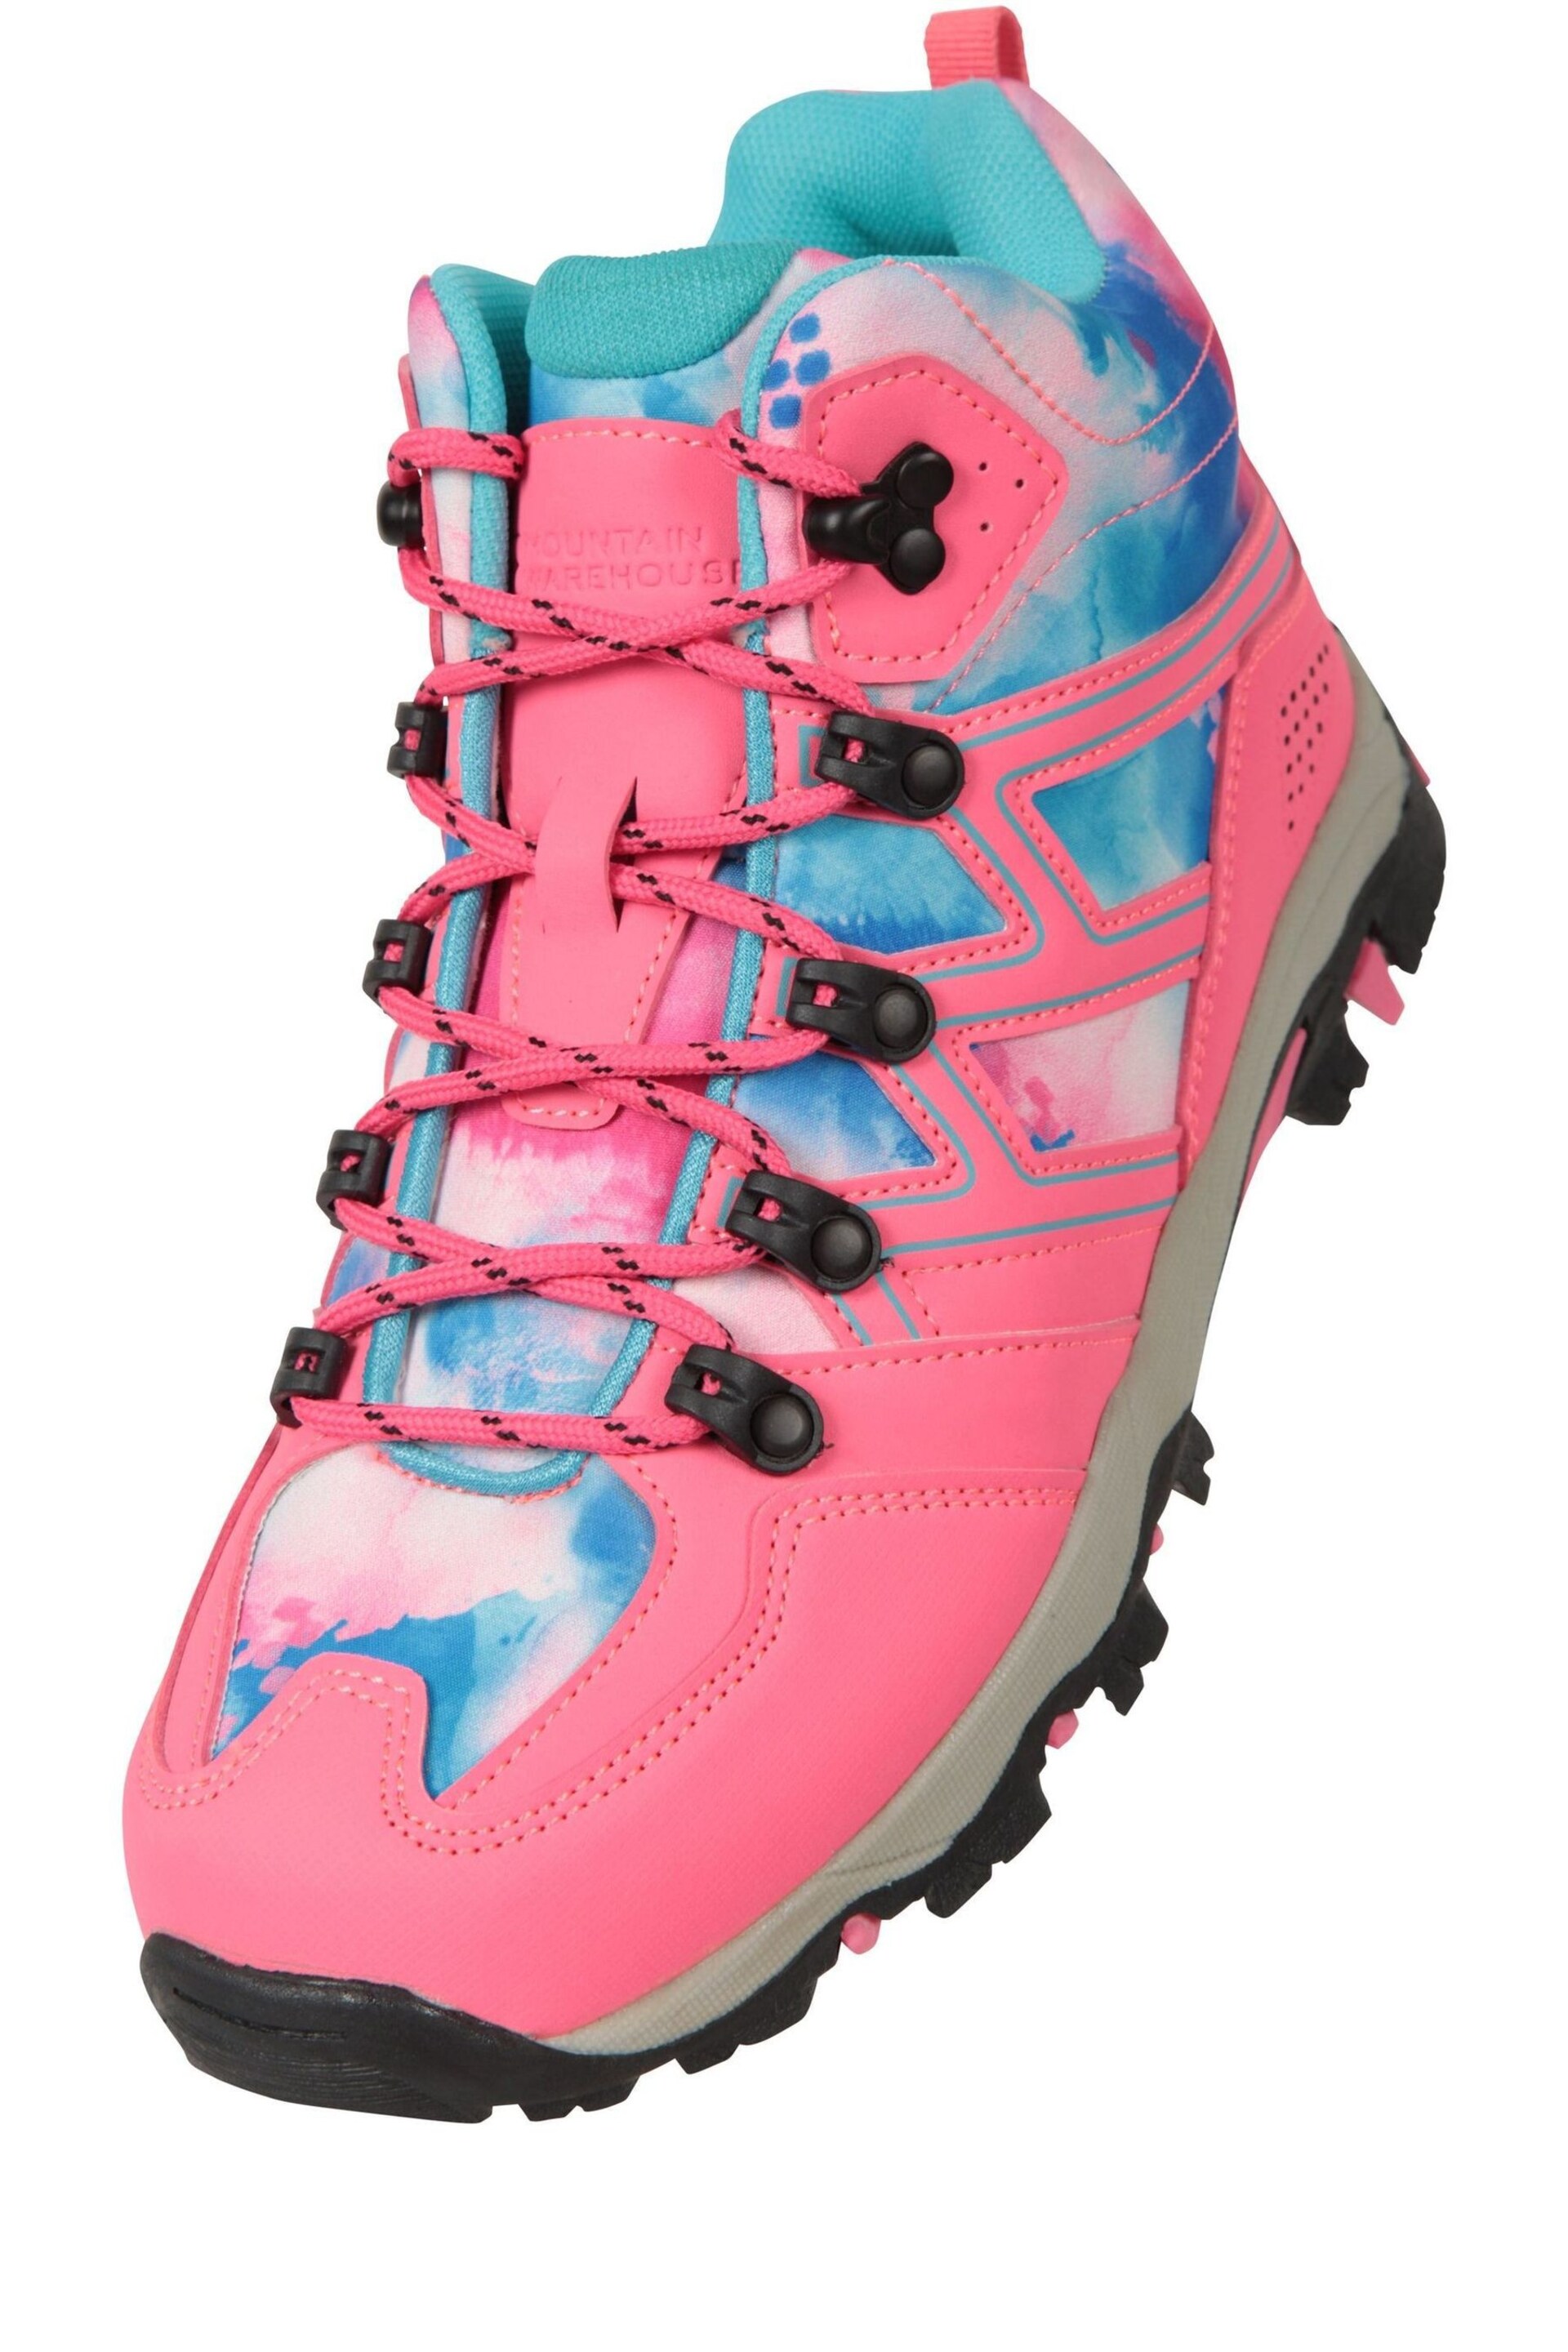 Mountain Warehouse Pink Oscar II Kids Walking Boots - Image 4 of 6